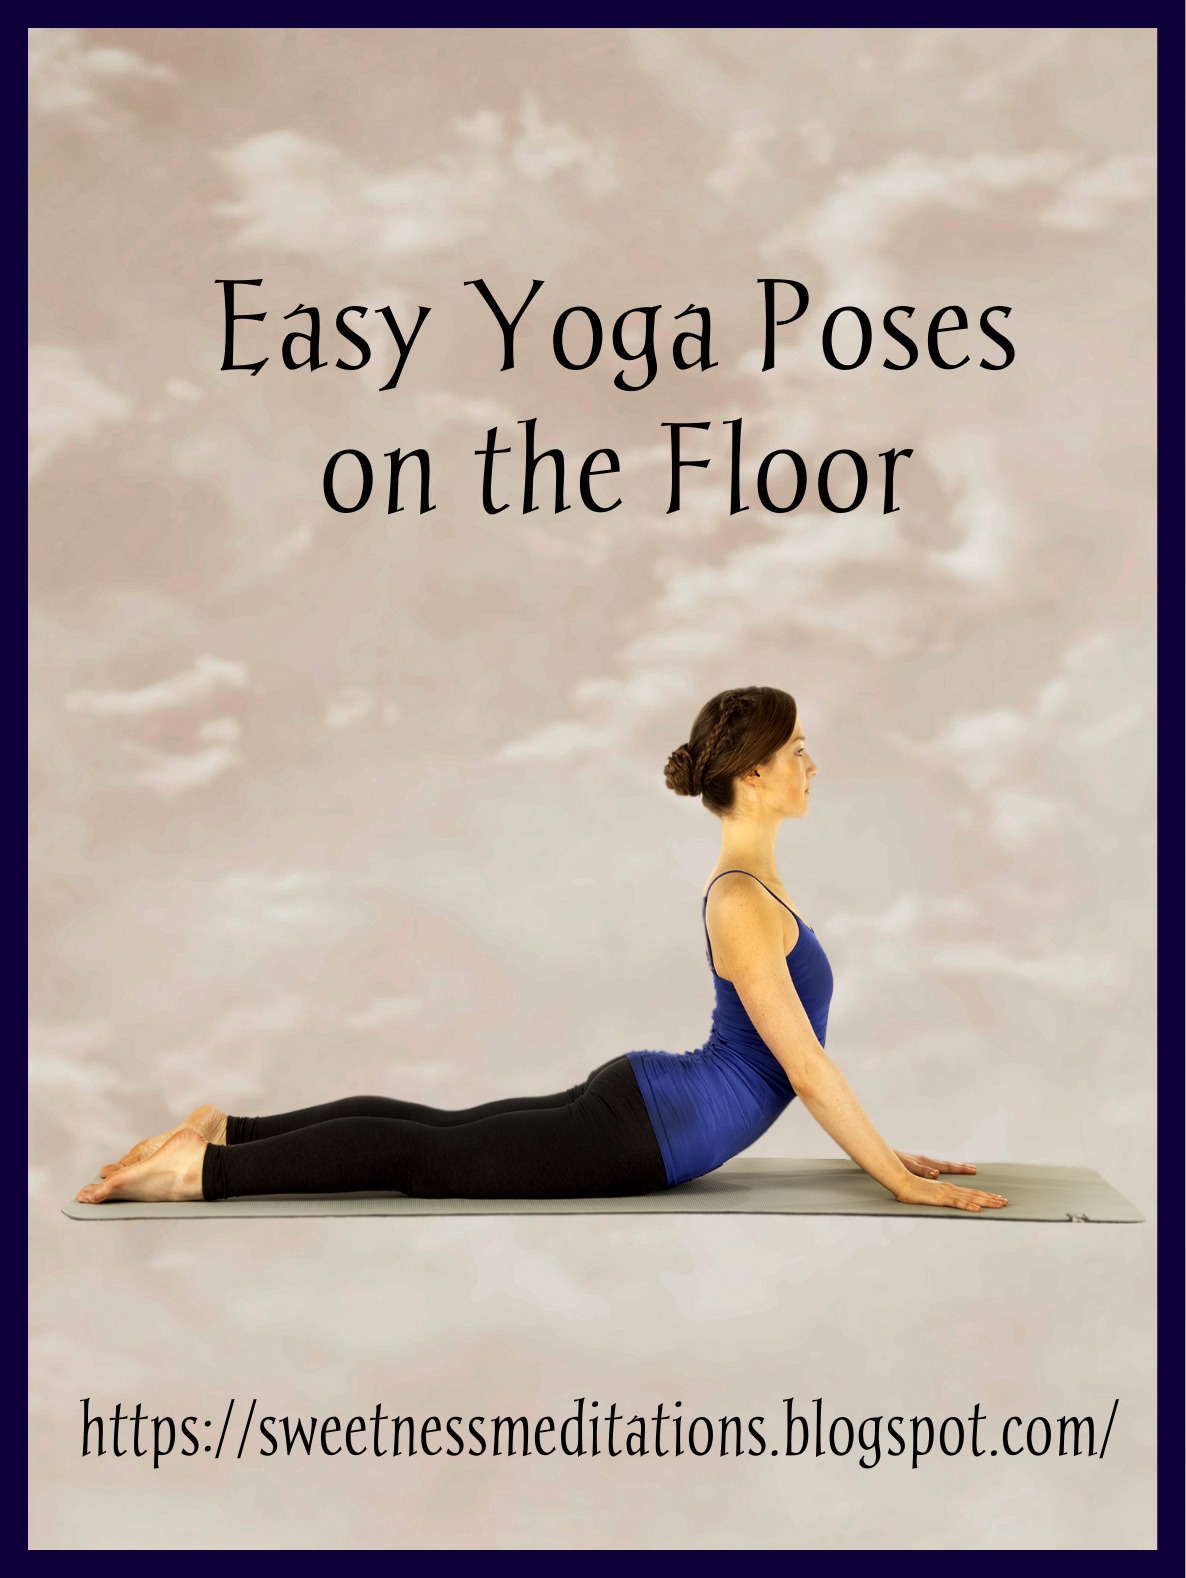 Sweetness Meditations: Easy Yoga Poses on the Floor